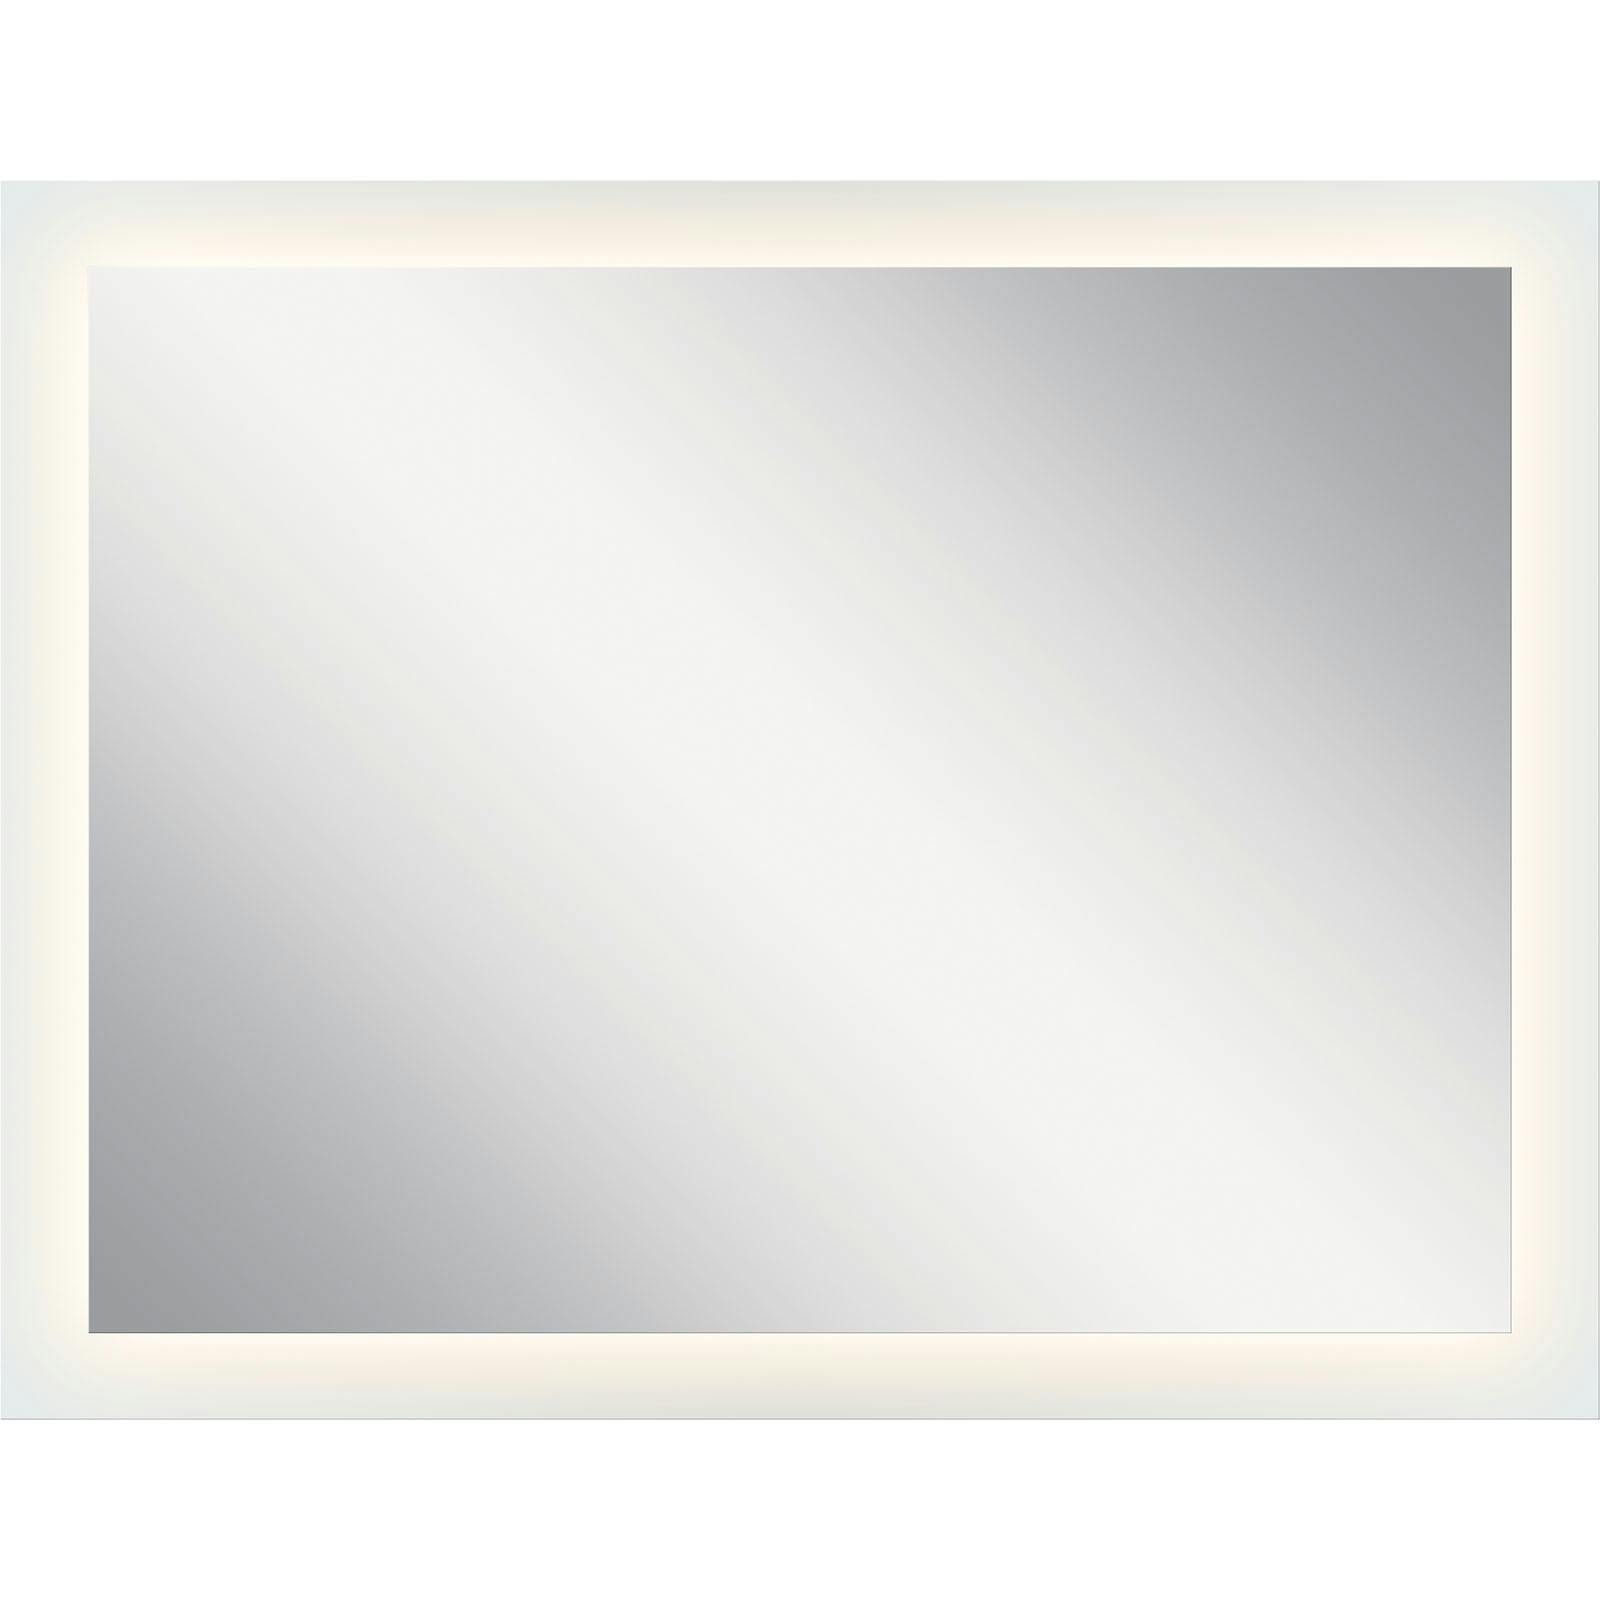 54" x 42" Rectangular LED Backlit Mirror on a white background